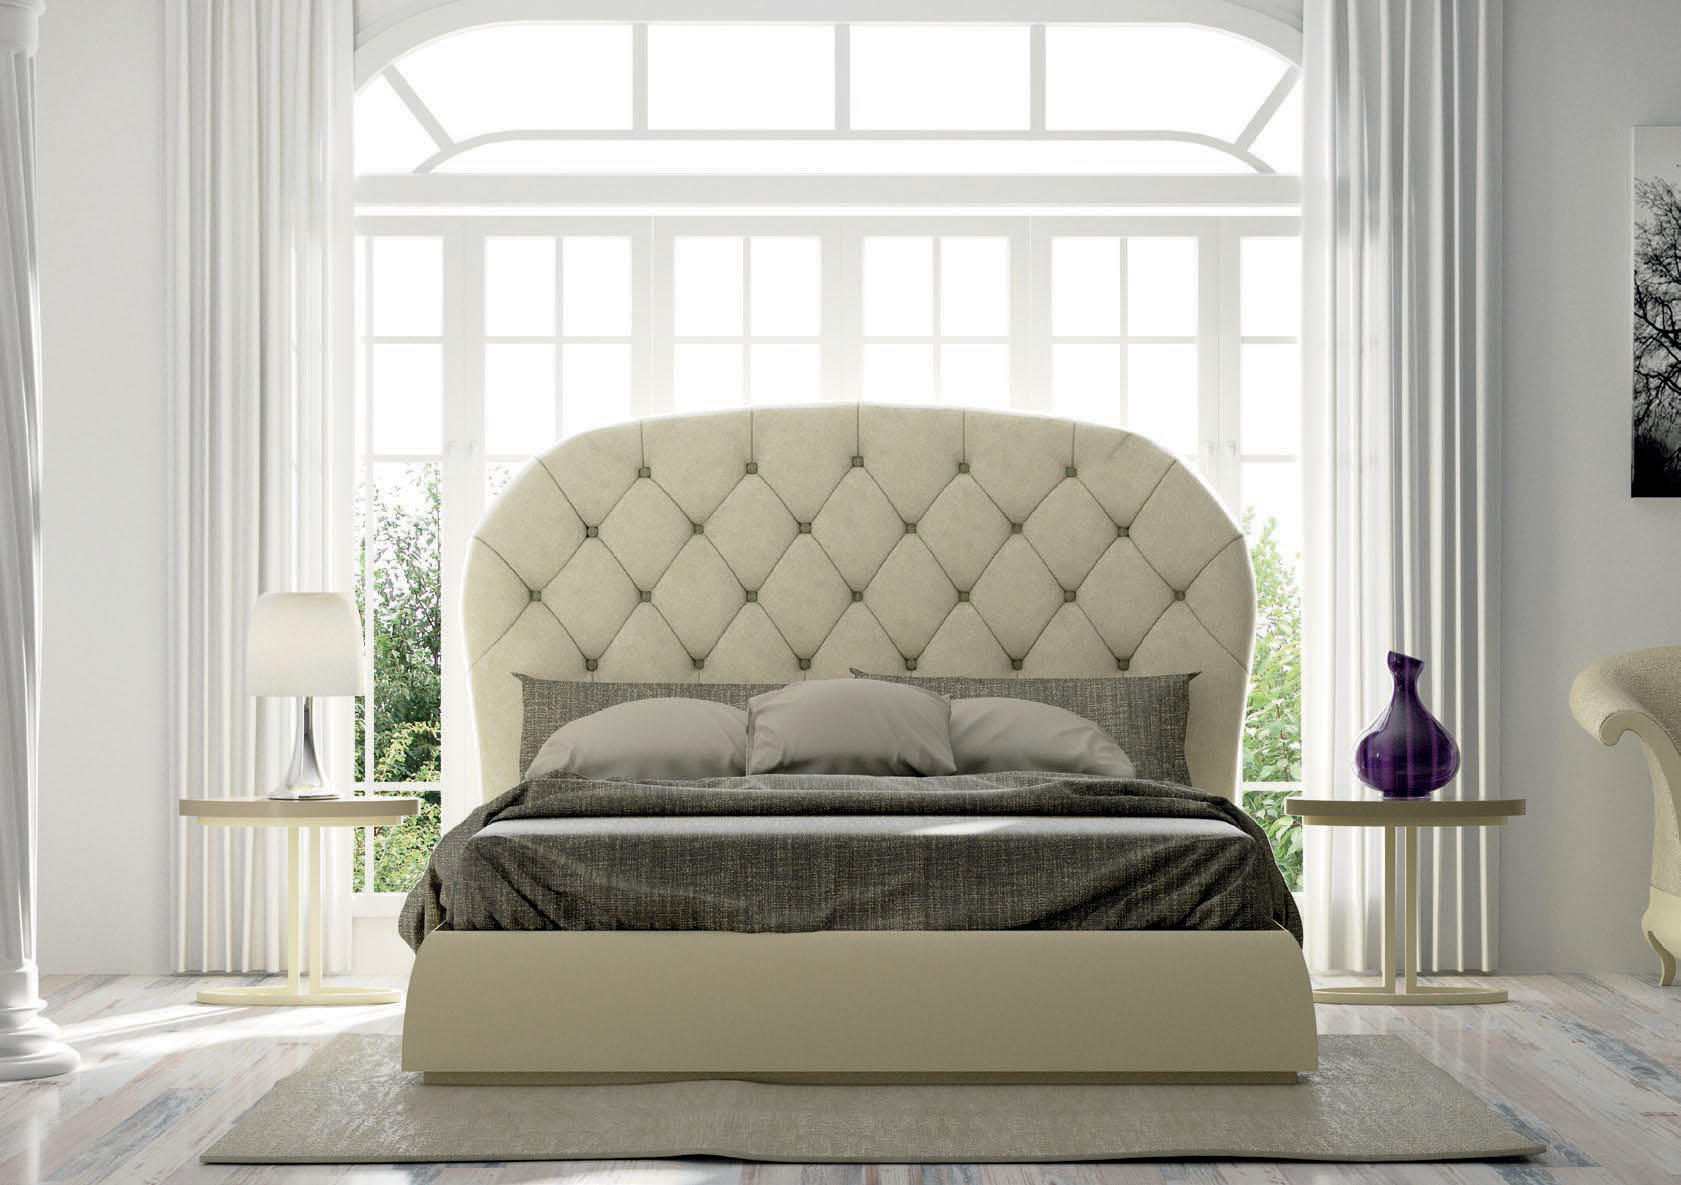 Brands Franco Furniture Bedrooms vol1, Spain DOR 150